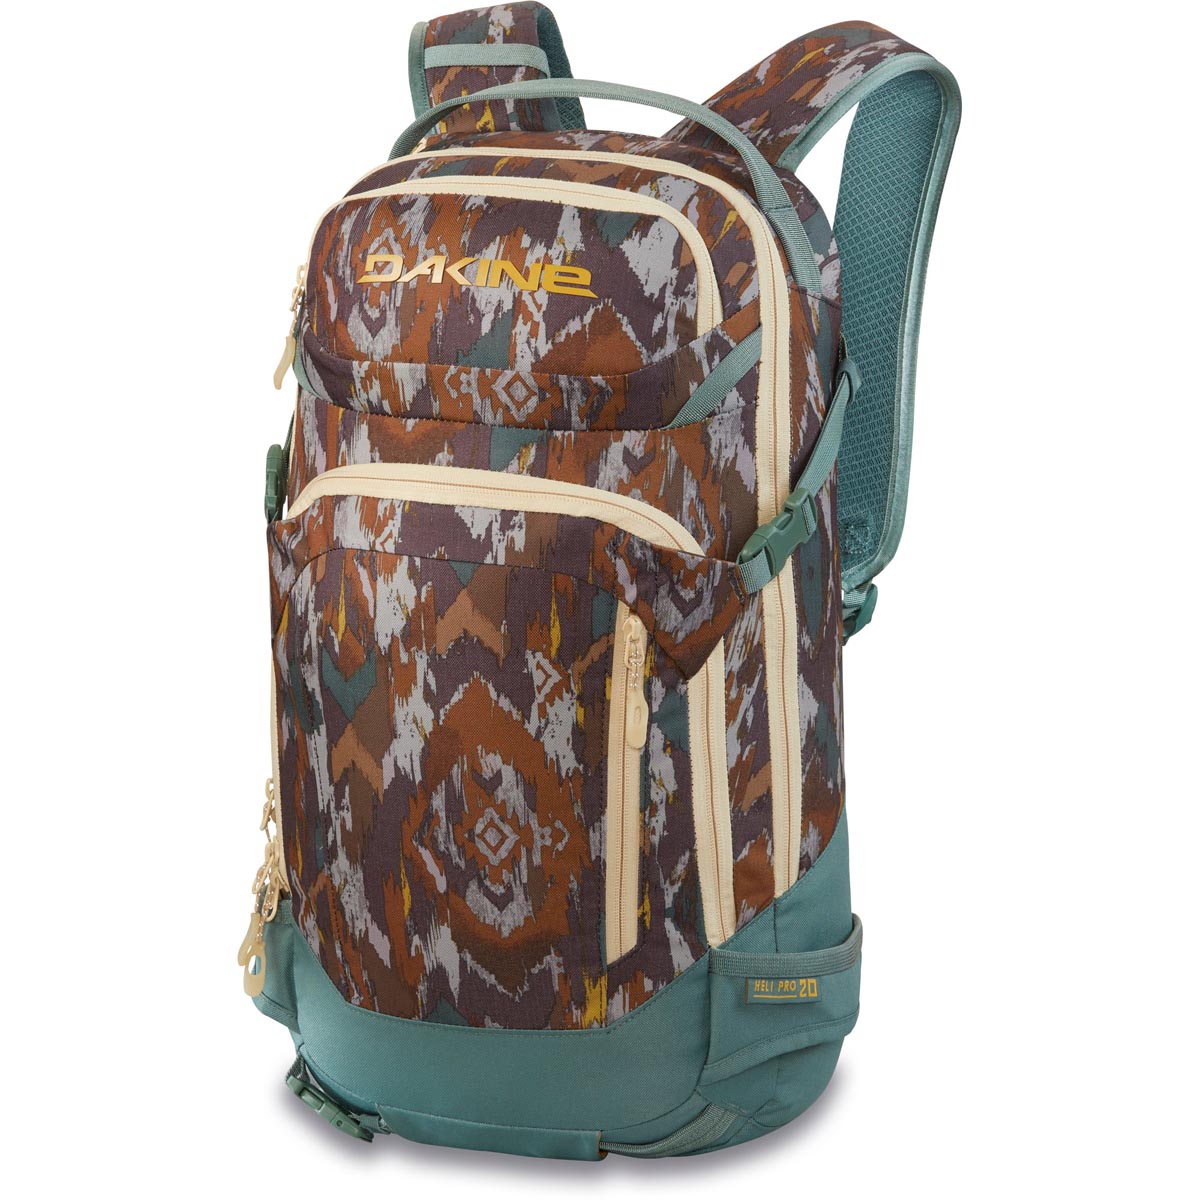 Dakine Heli Pro 20l Backpack - Painted Canyon image 1